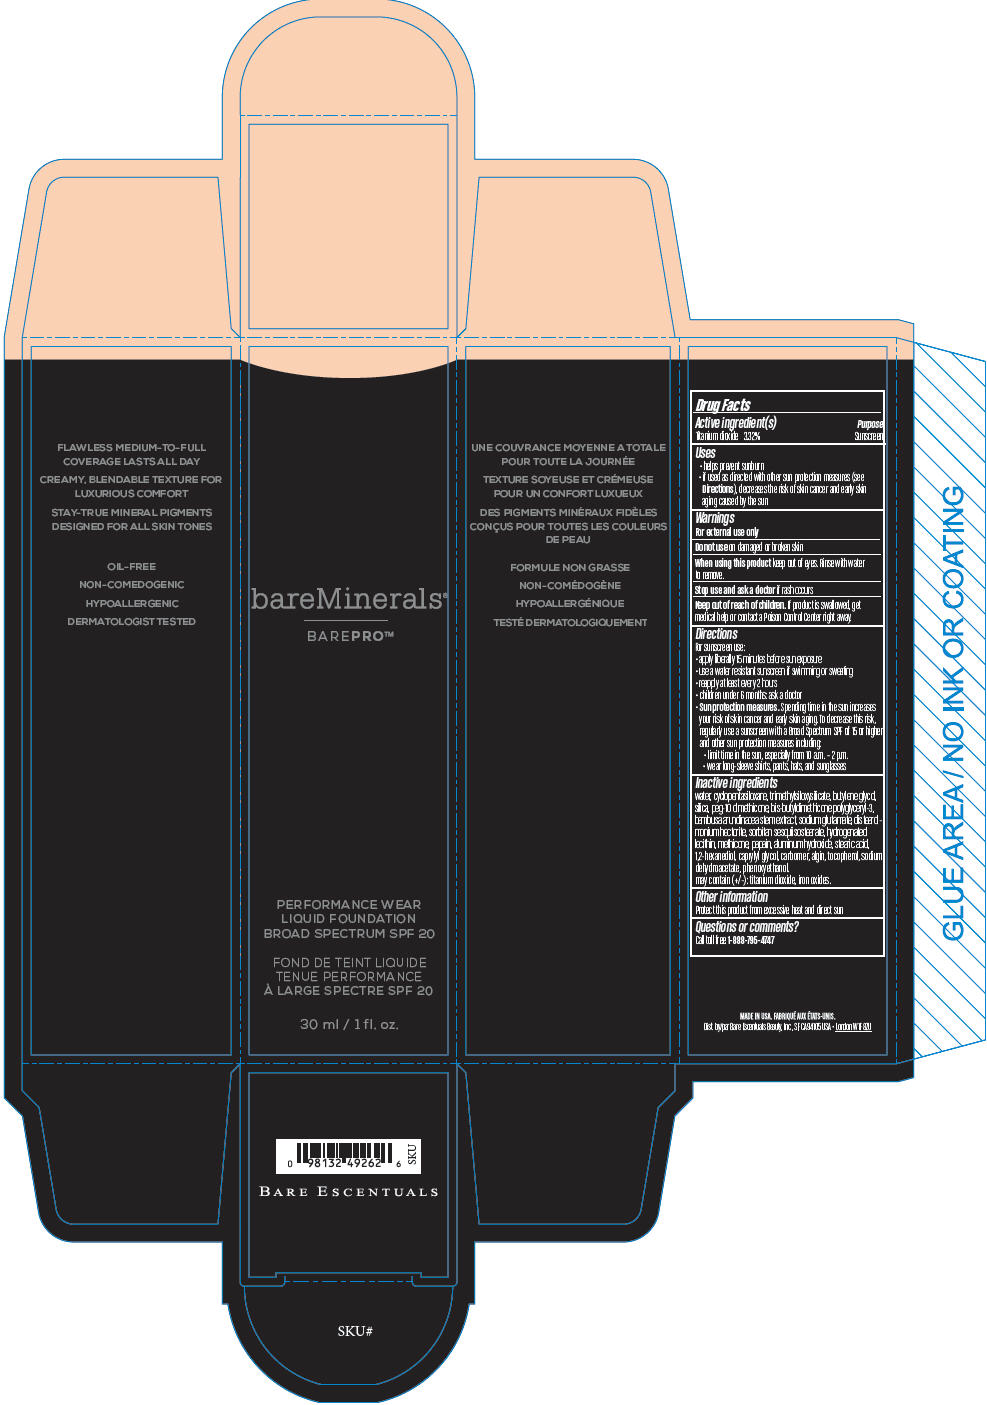 PRINCIPAL DISPLAY PANEL - 30 ml Bottle Carton - Cool Beige 10